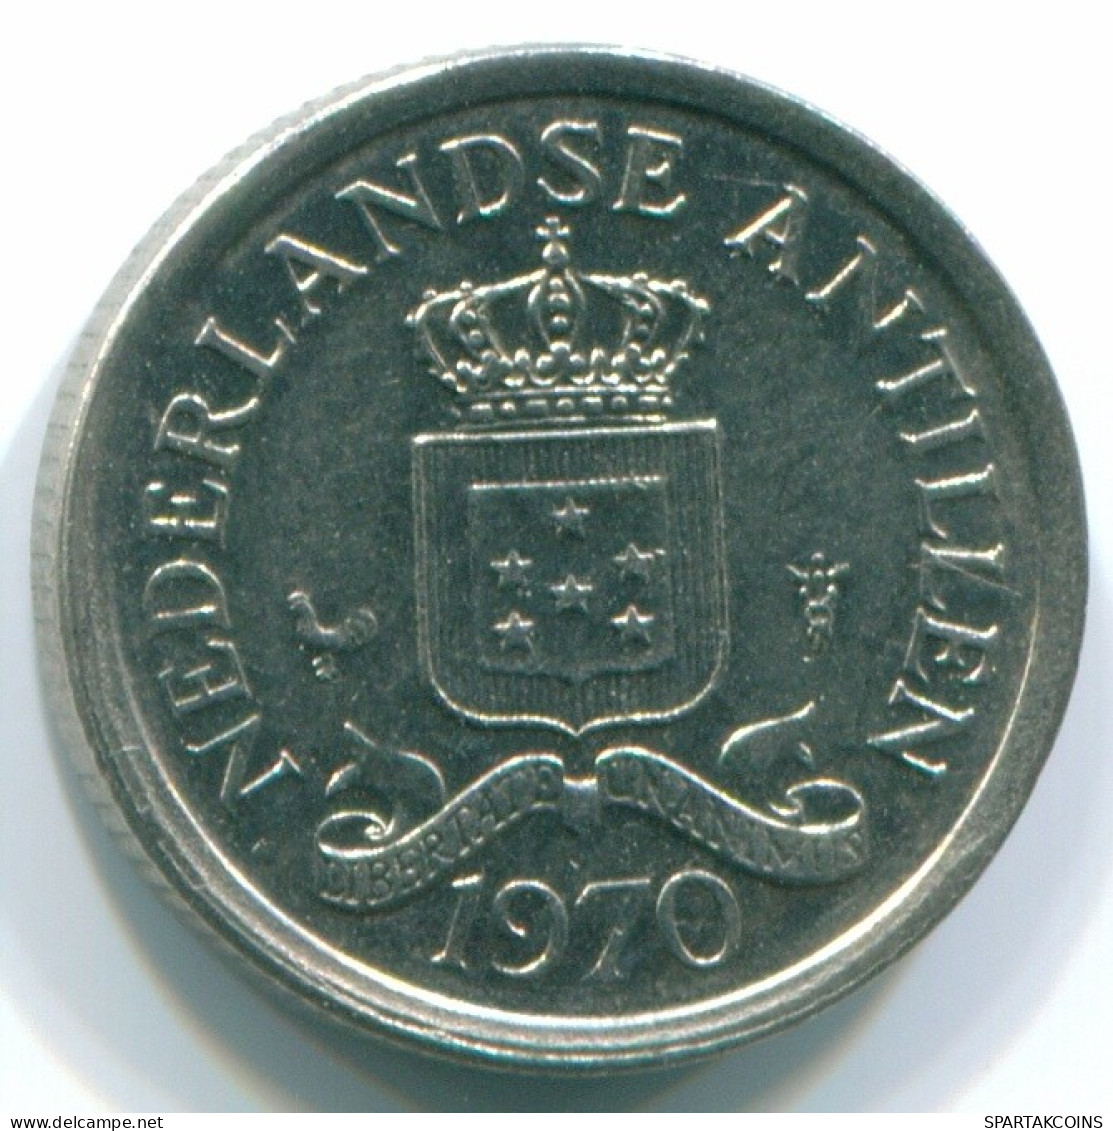 10 CENTS 1970 NIEDERLÄNDISCHE ANTILLEN Nickel Koloniale Münze #S13333.D.A - Netherlands Antilles